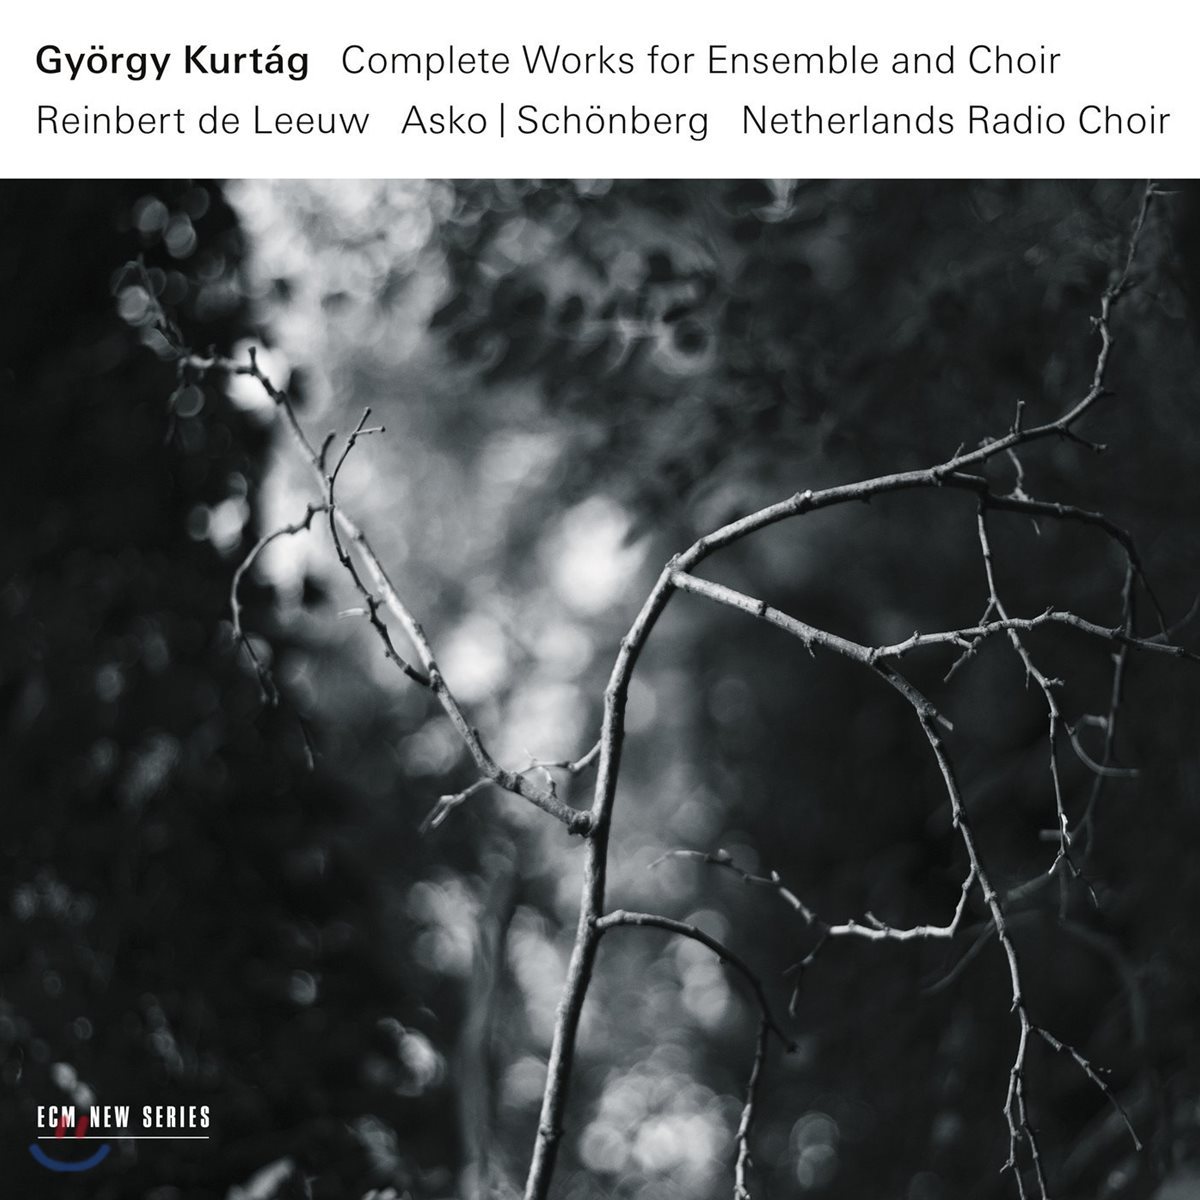 Netherlands Radio Choir 죄르지 쿠르탁: 앙상블과 합창을 위한 음악 전집 - 네덜란드 라디오 합창단 (Gyorgy Kurtag: Complete Works for Ensemble &amp; Choir)